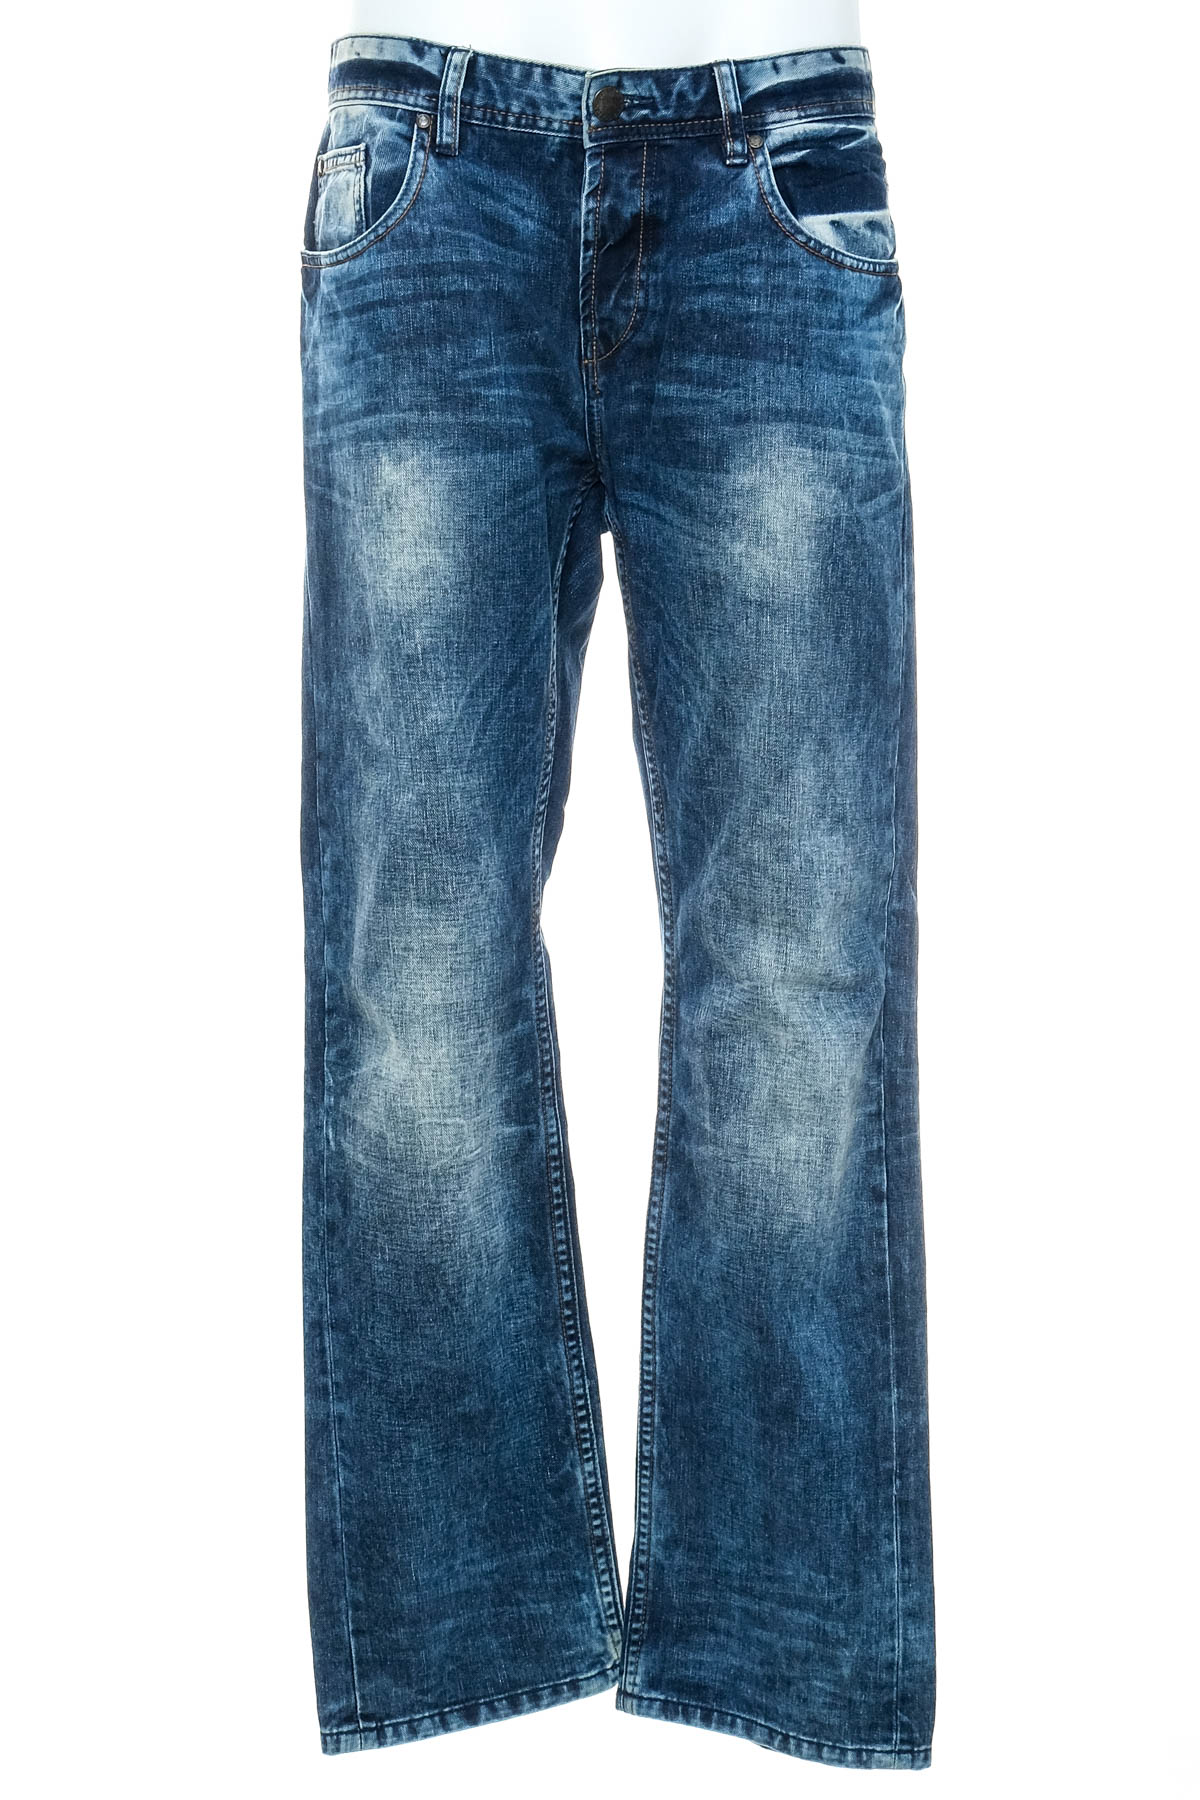 Men's jeans - SMOG - 0